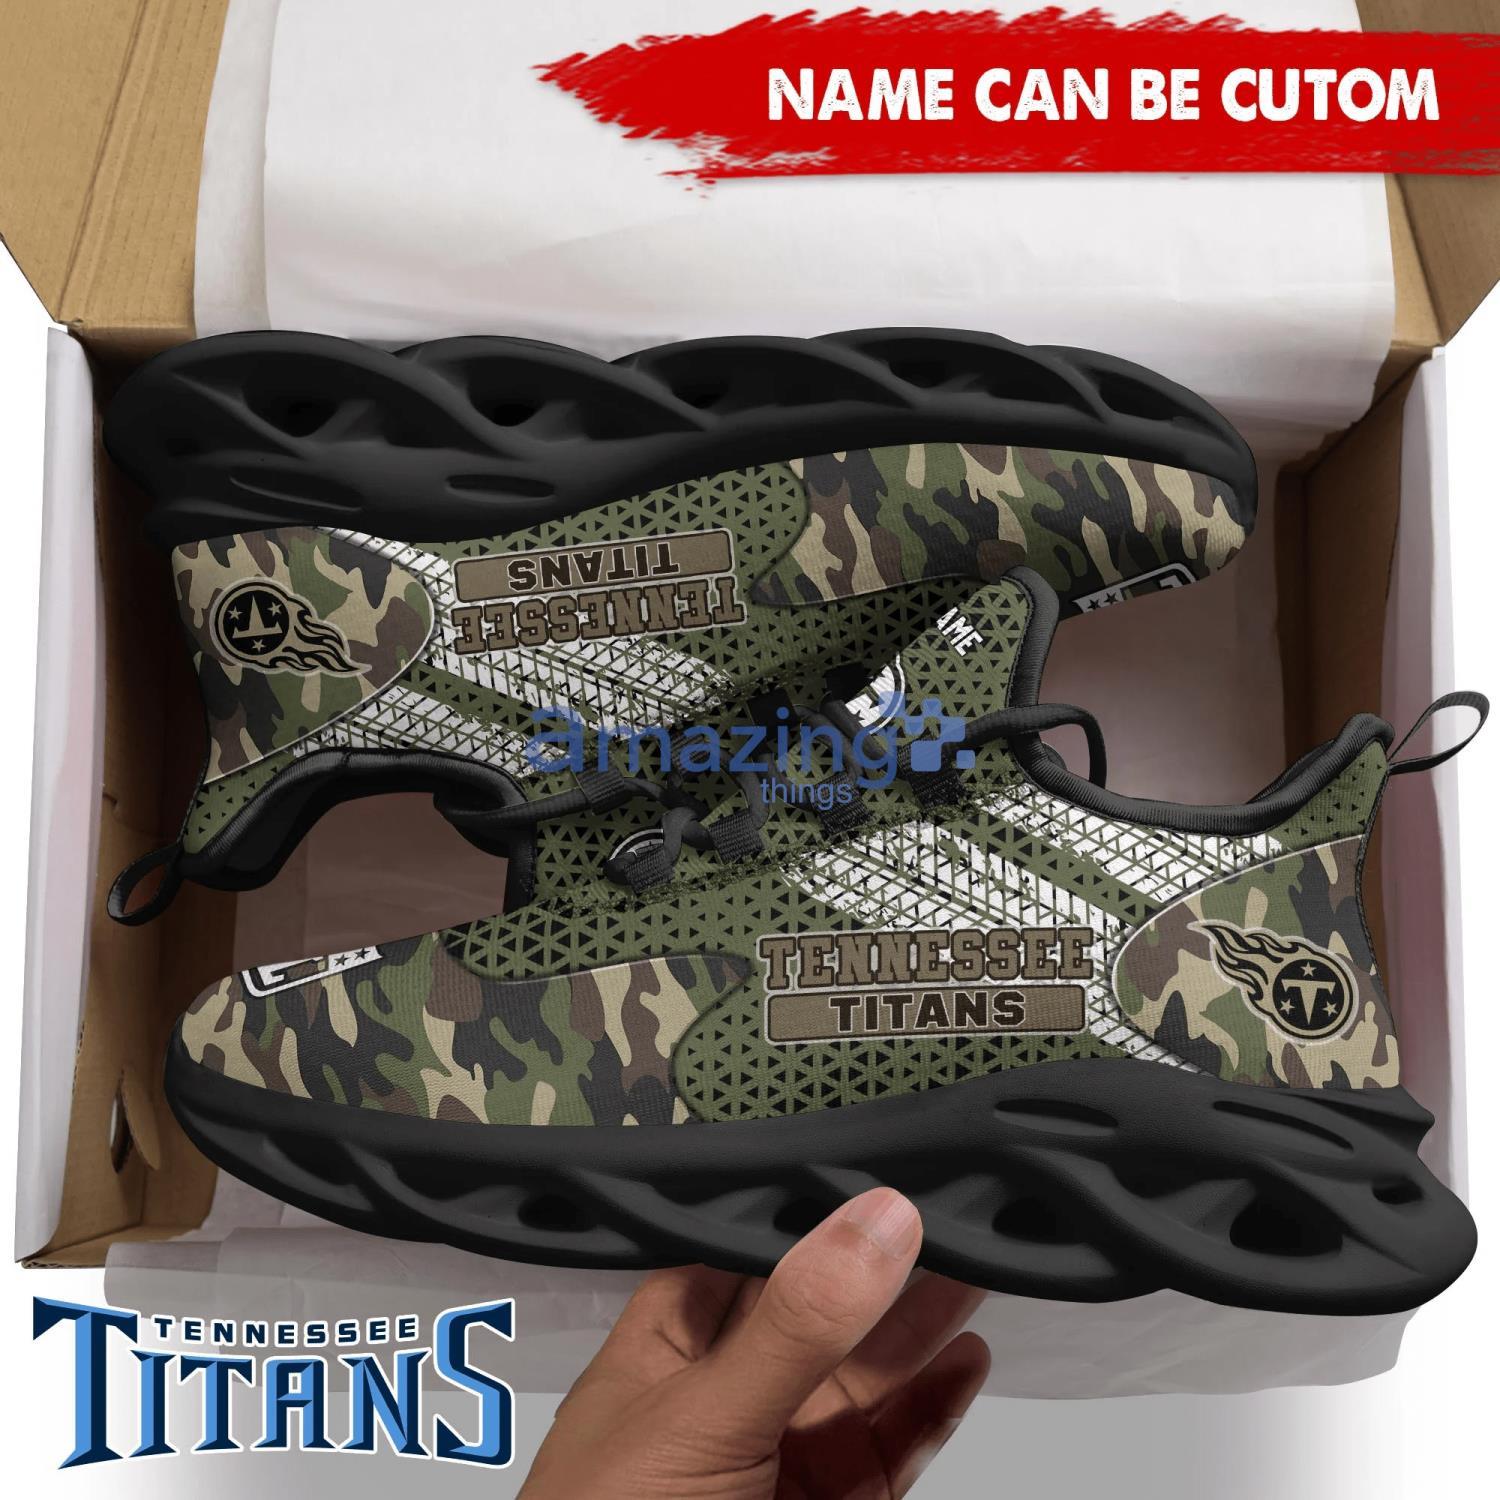 NRL Gold Coast Titans Air Cushion Sport Shoes Custom Name - Freedomdesign